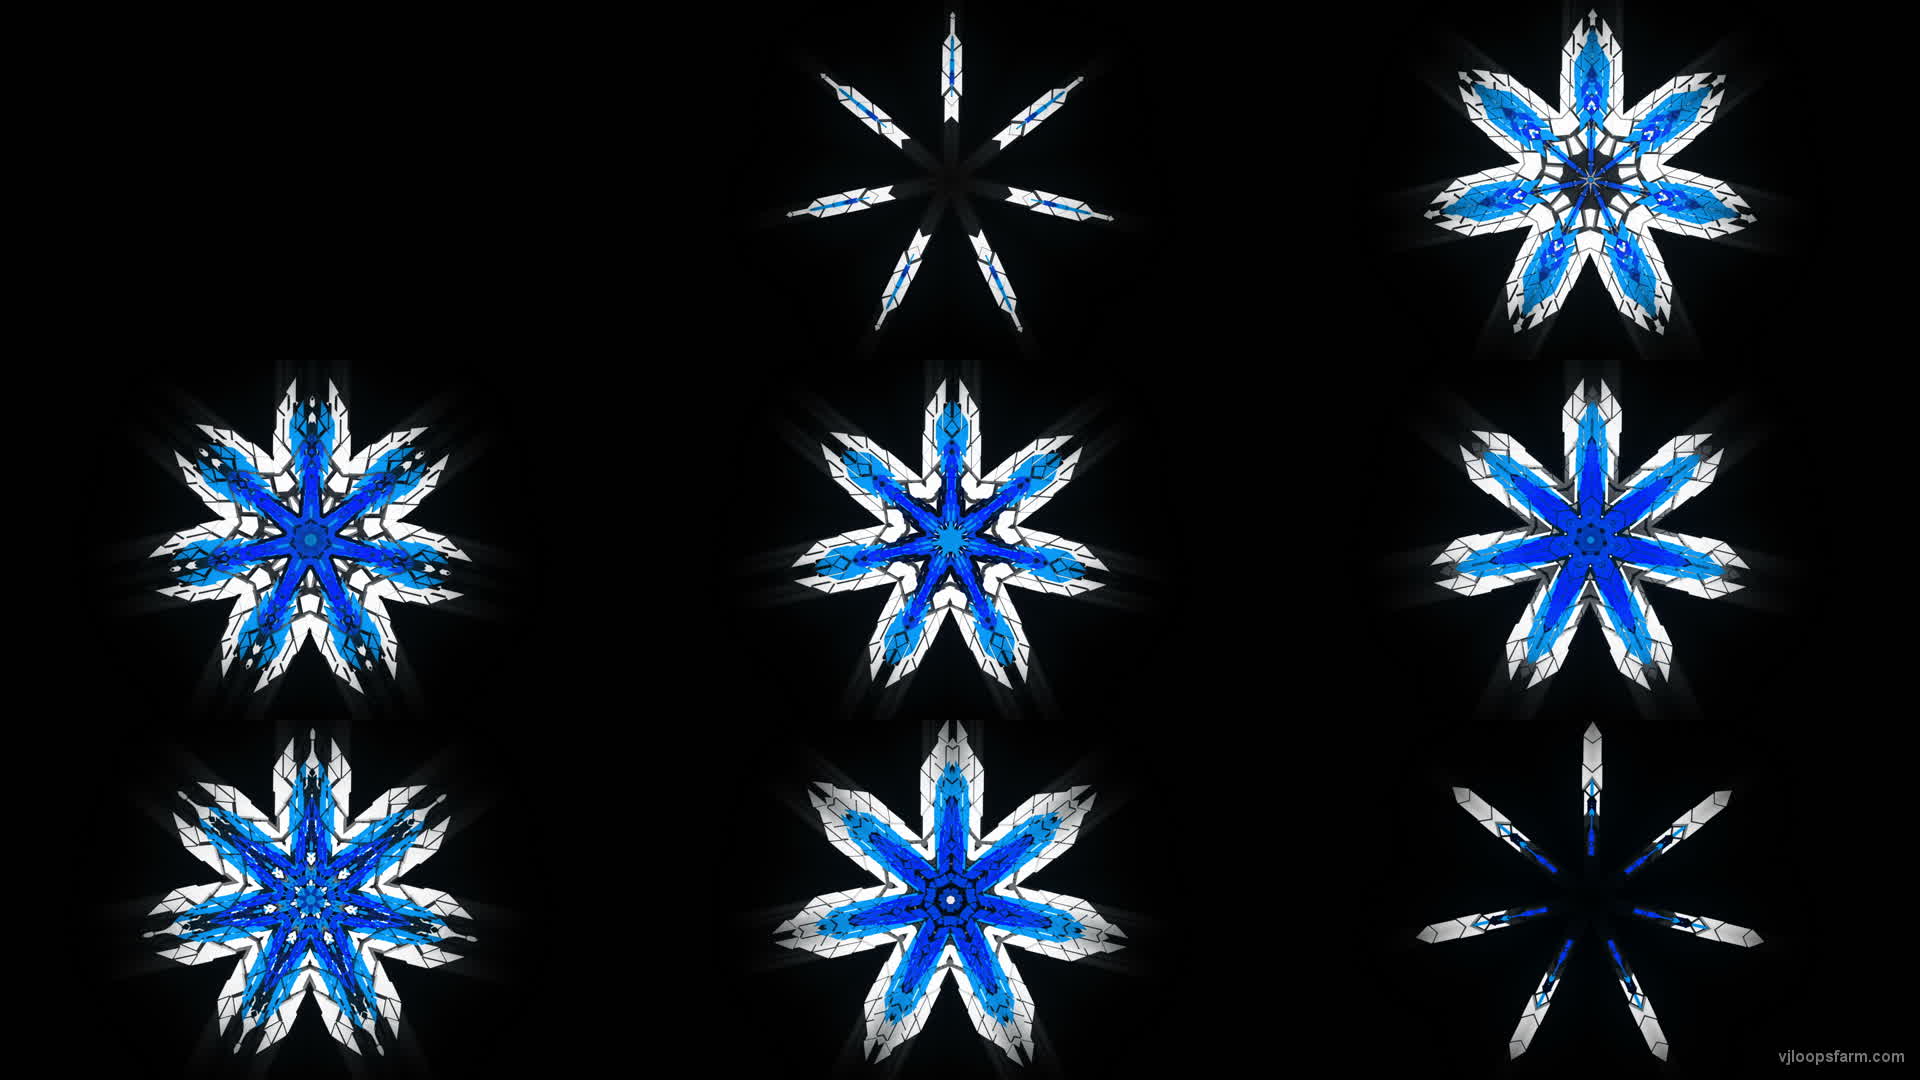 Septener Star Of The Magicians blue geometric 7 points symbolik snowflake video art vj loop